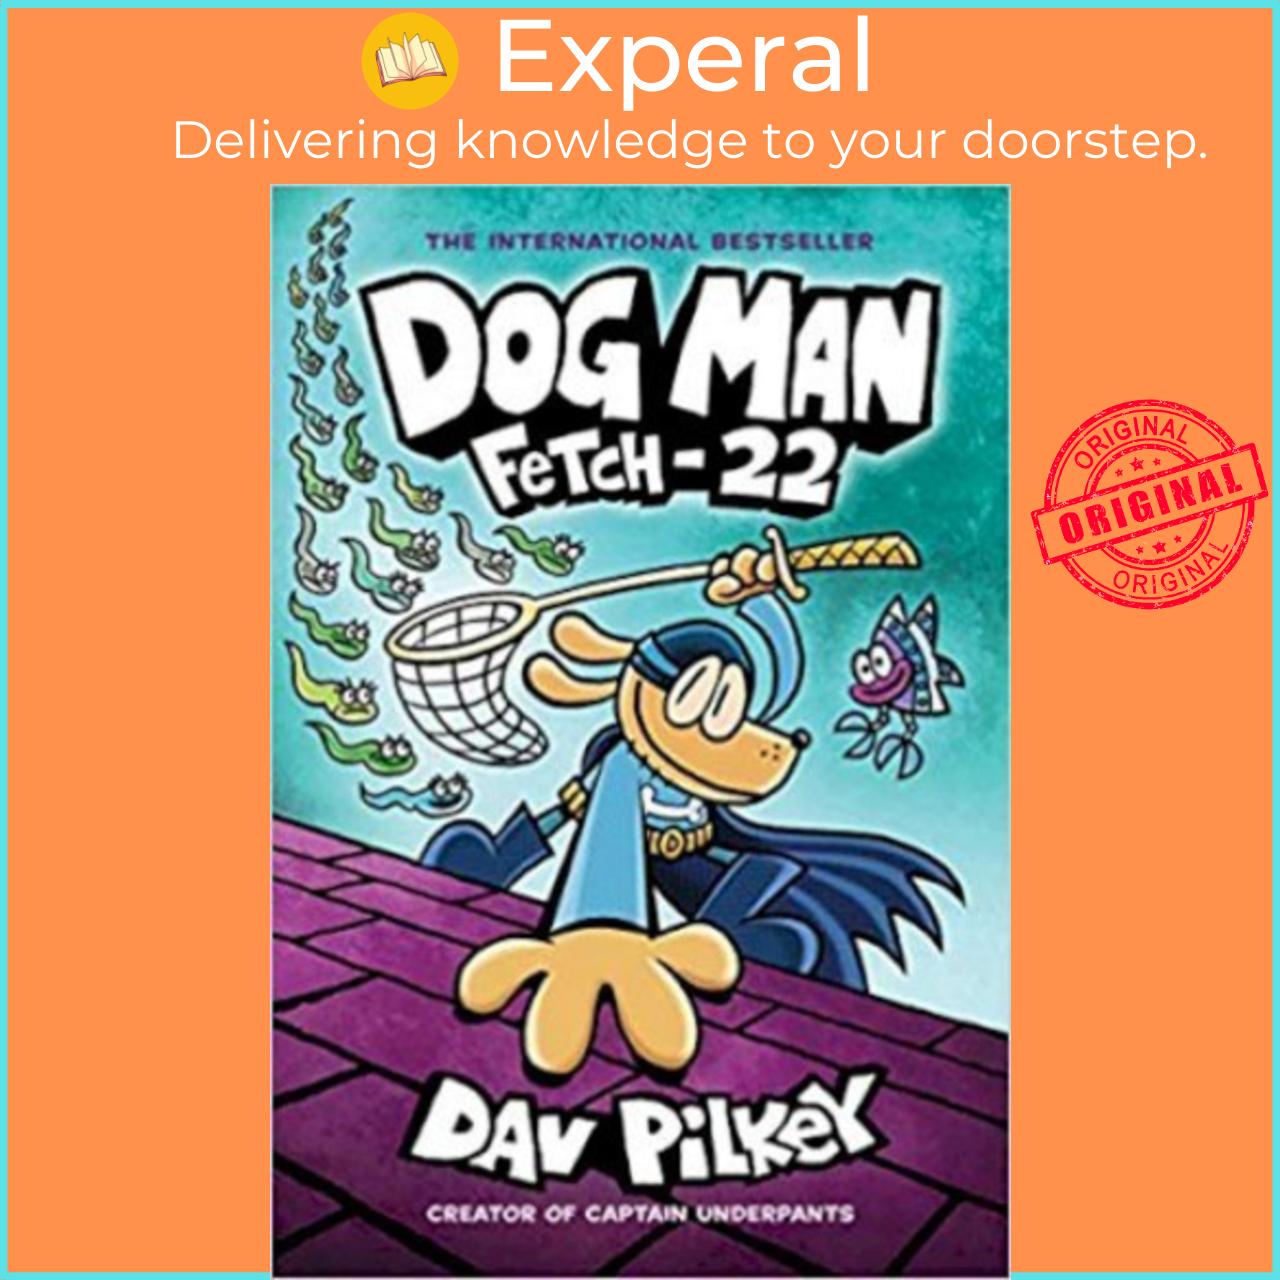 Sách - Dog Man: Fetch-22 by Dav Pilkey (US edition, hardcover)